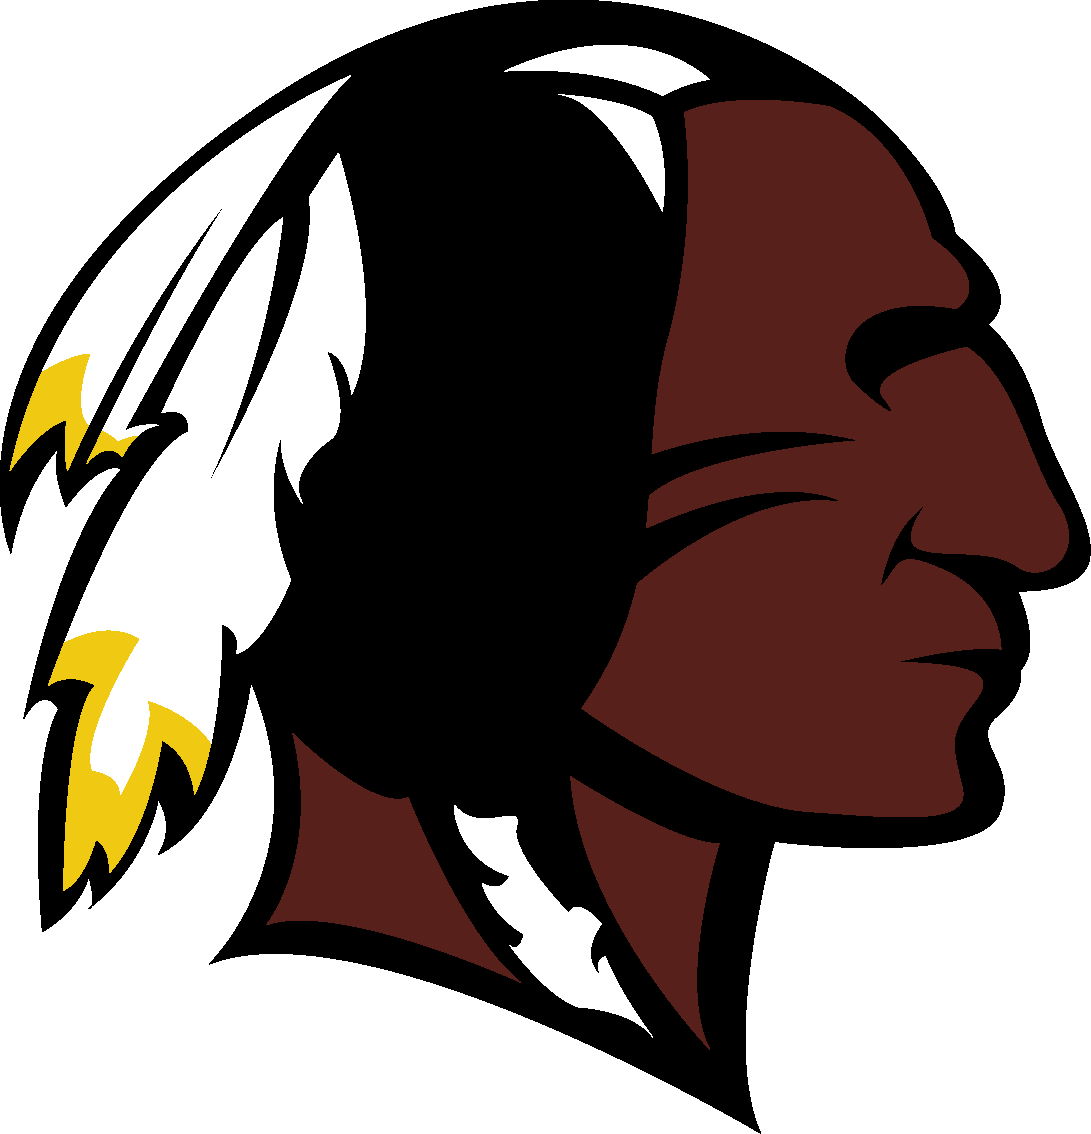 Washington Redskins Logo - New Washington Redskins logo Creamer's Sports